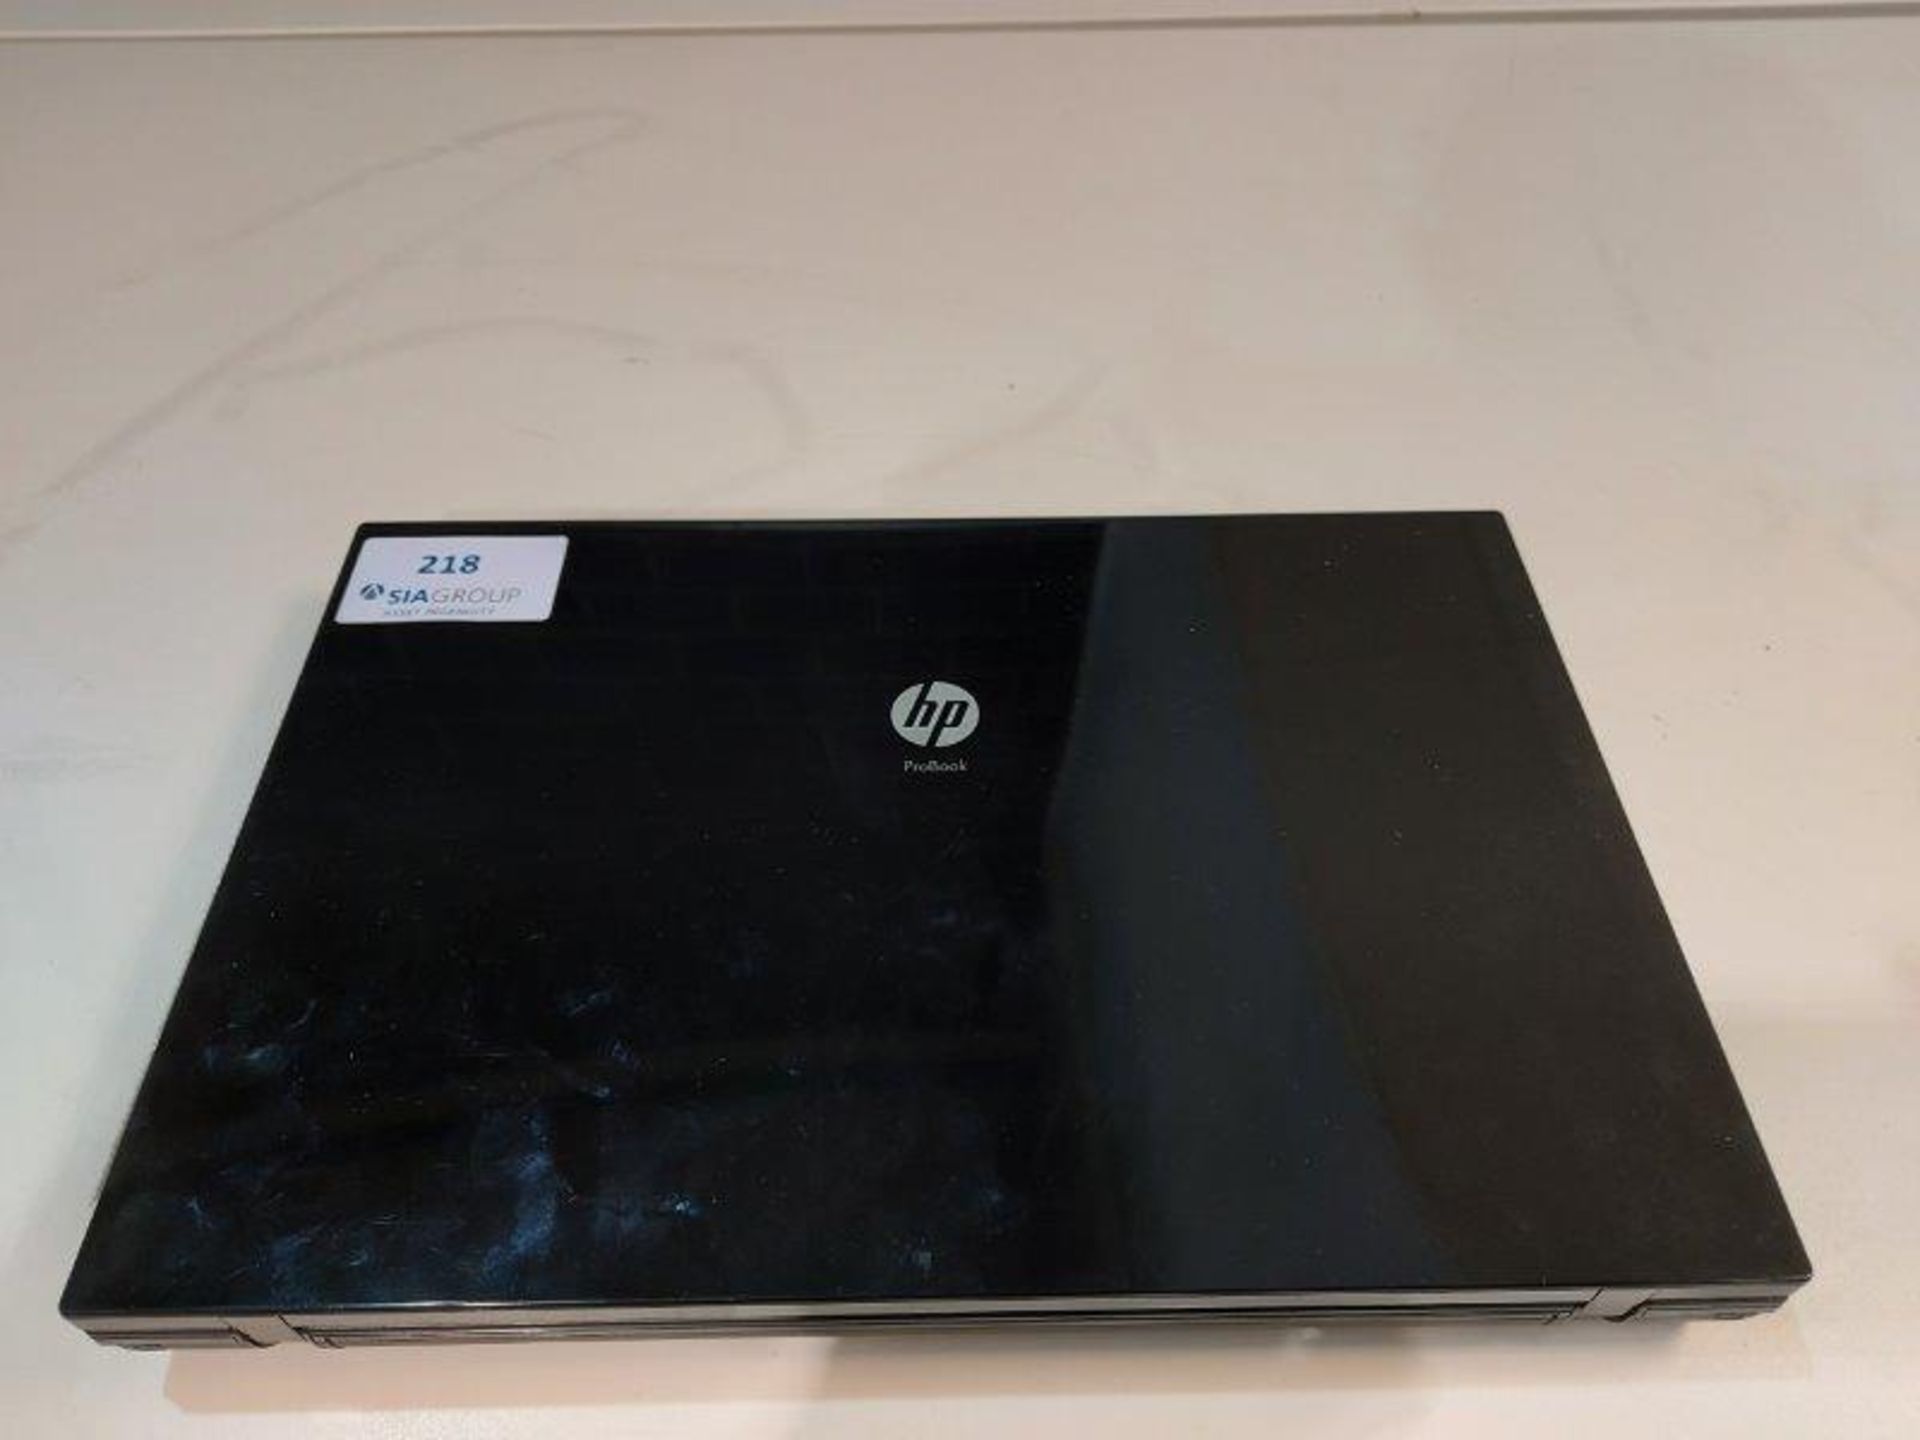 HP ProBook 4510s intel core duo laptop - Image 3 of 4